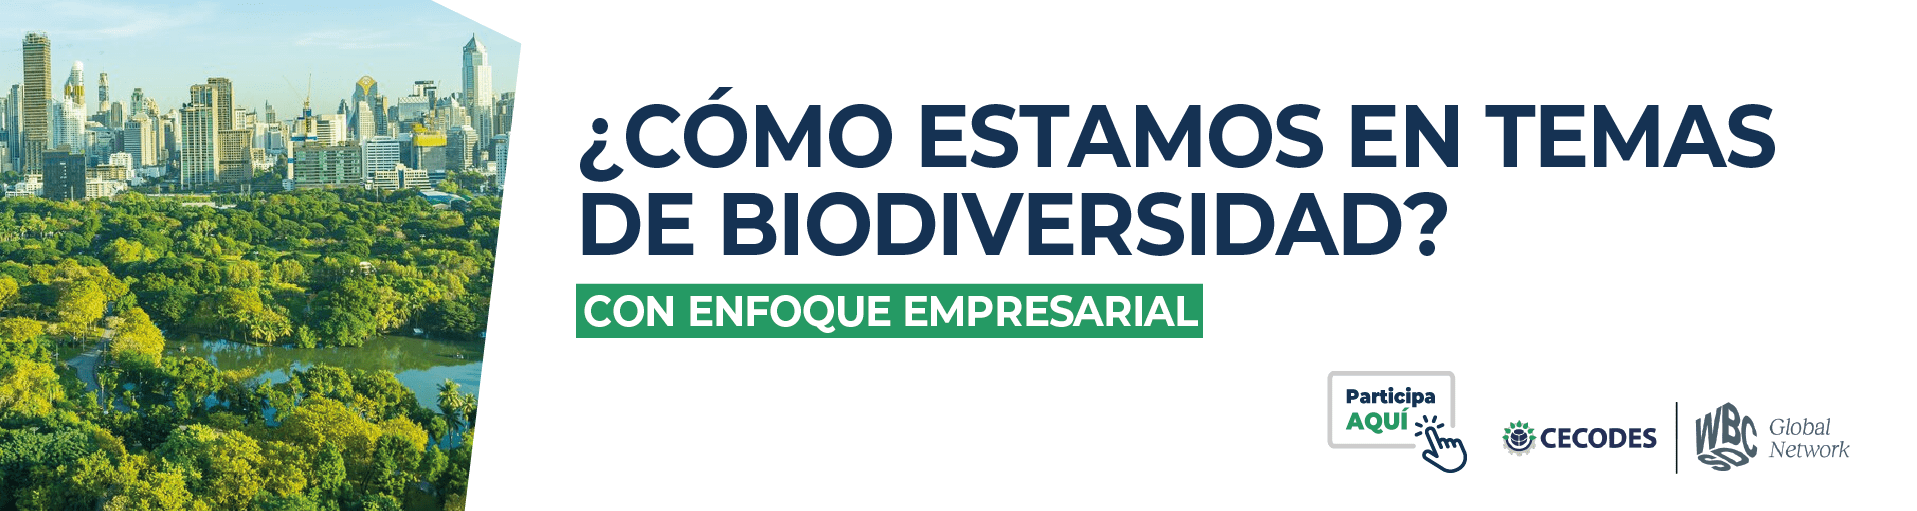 Banner encuesta biodiversidad